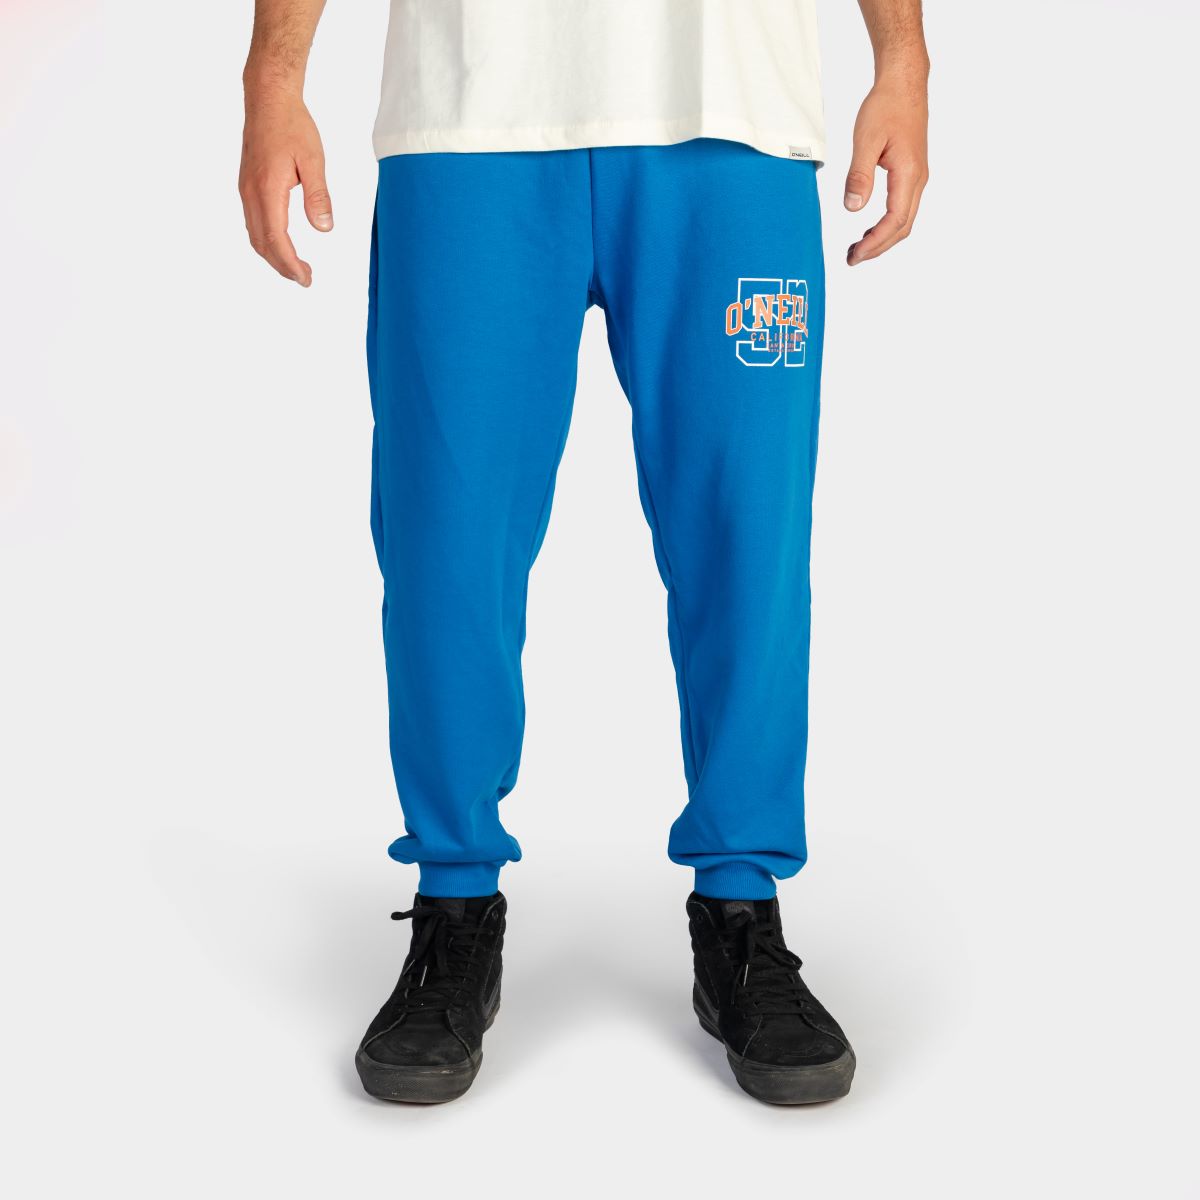 Buzo Caballero Combinado Azul Acero y Melange Pantalon Azul Acero